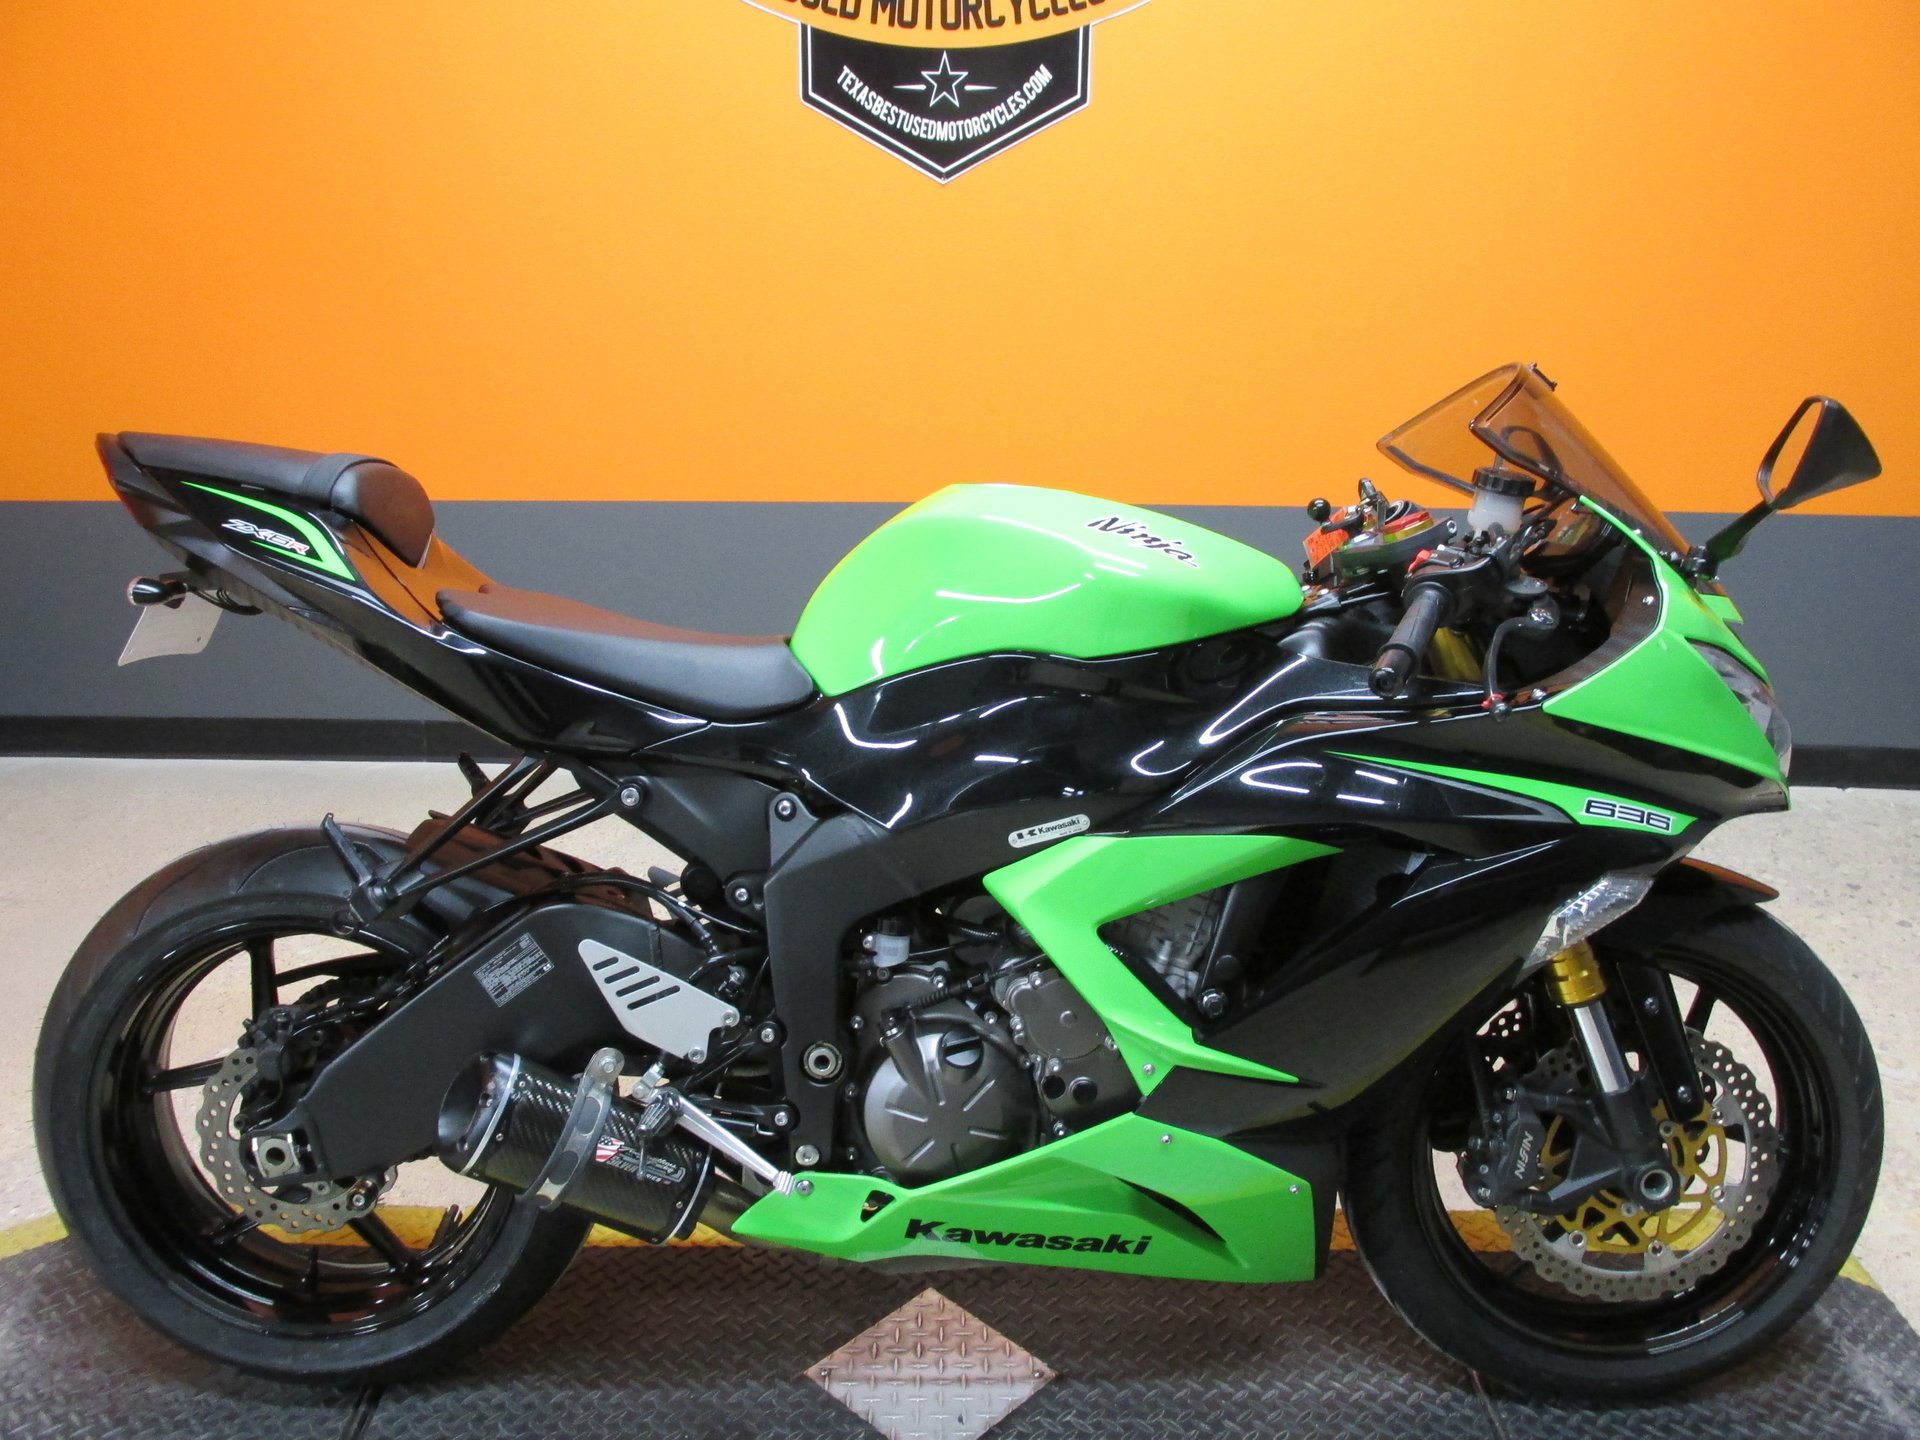 2013 Kawasaki Ninja | American Motorcycle Trading Company - Used 